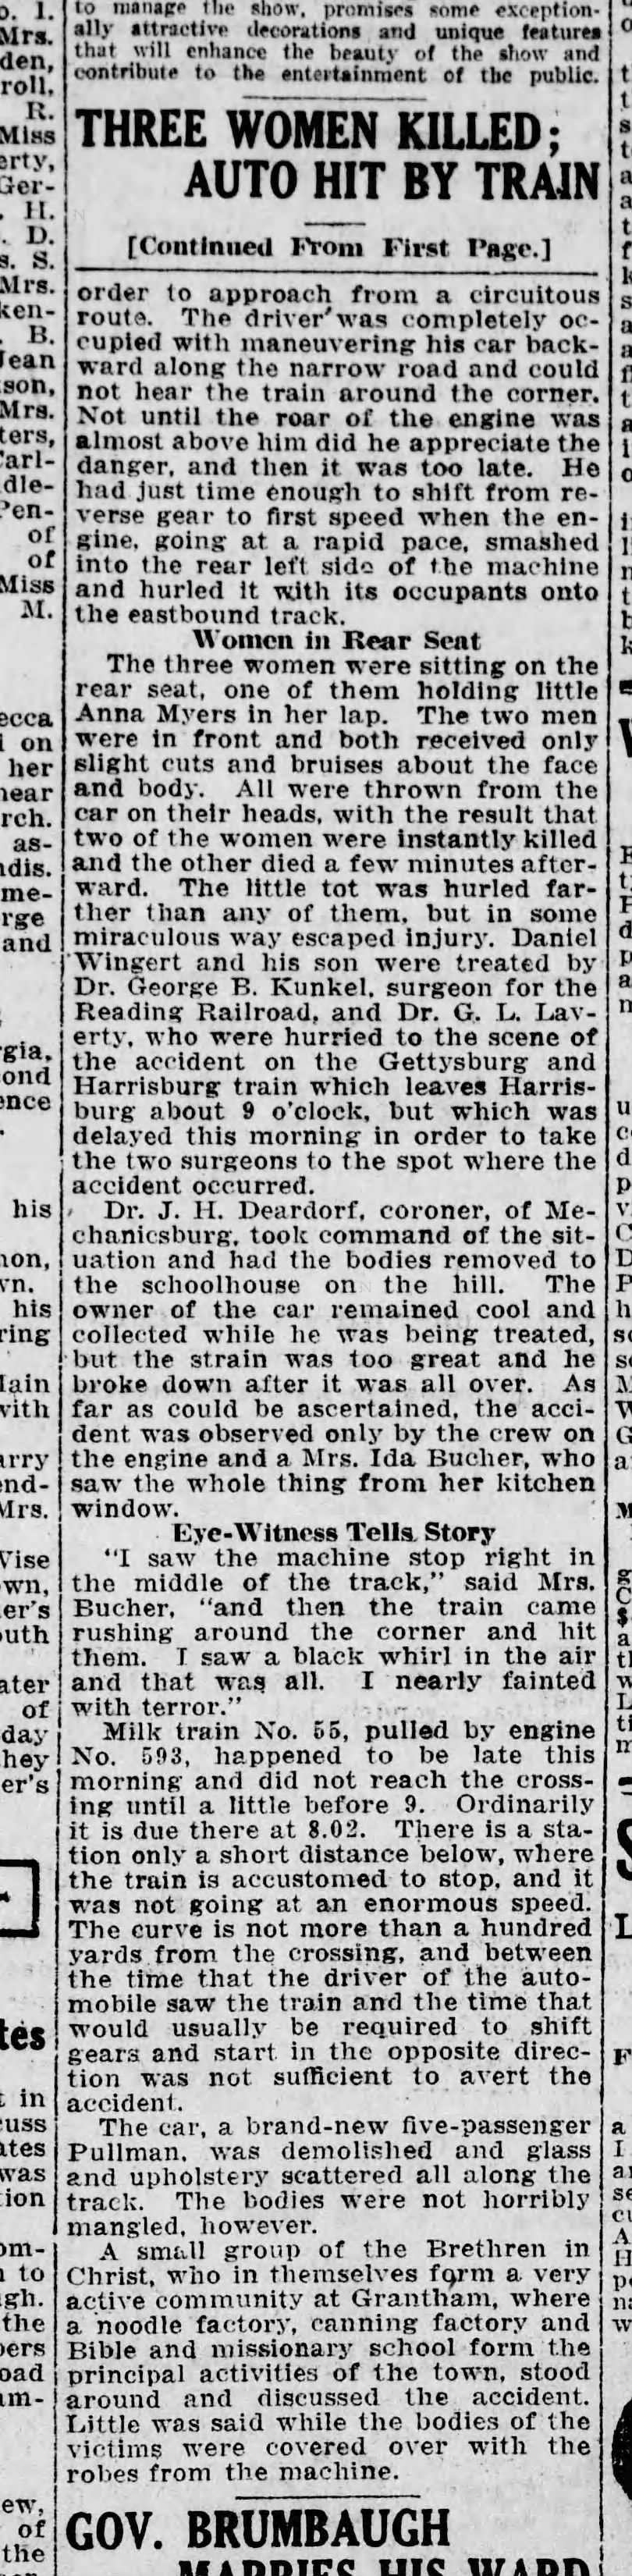 1916 january 29 Harrisburg Telegraph Three Women Killed by train